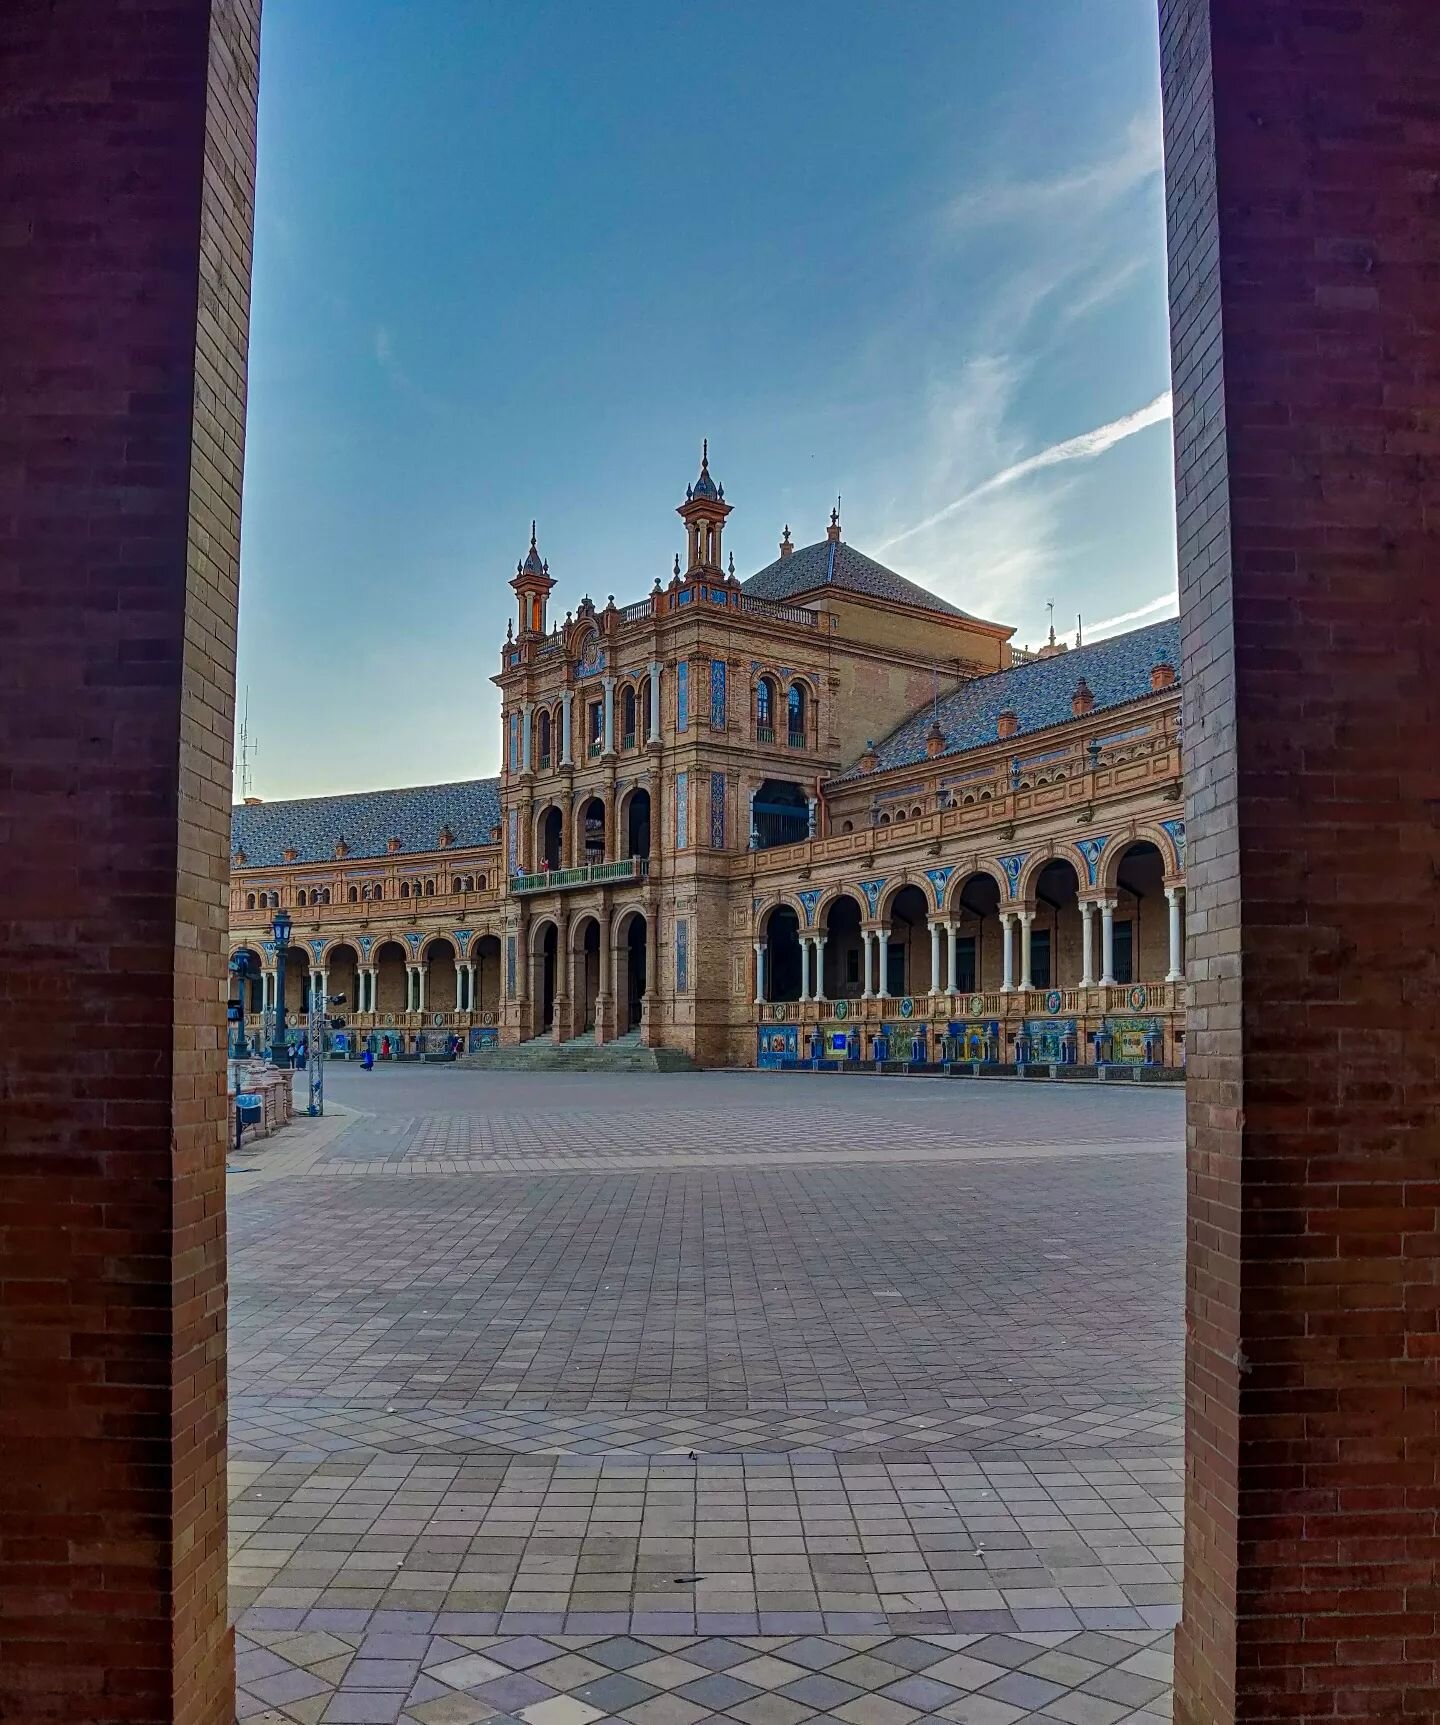 The Seville adventures continue at Plaza De Espana #seville #plazadeespa&ntilde;a #TravelPhotography #travel #spain